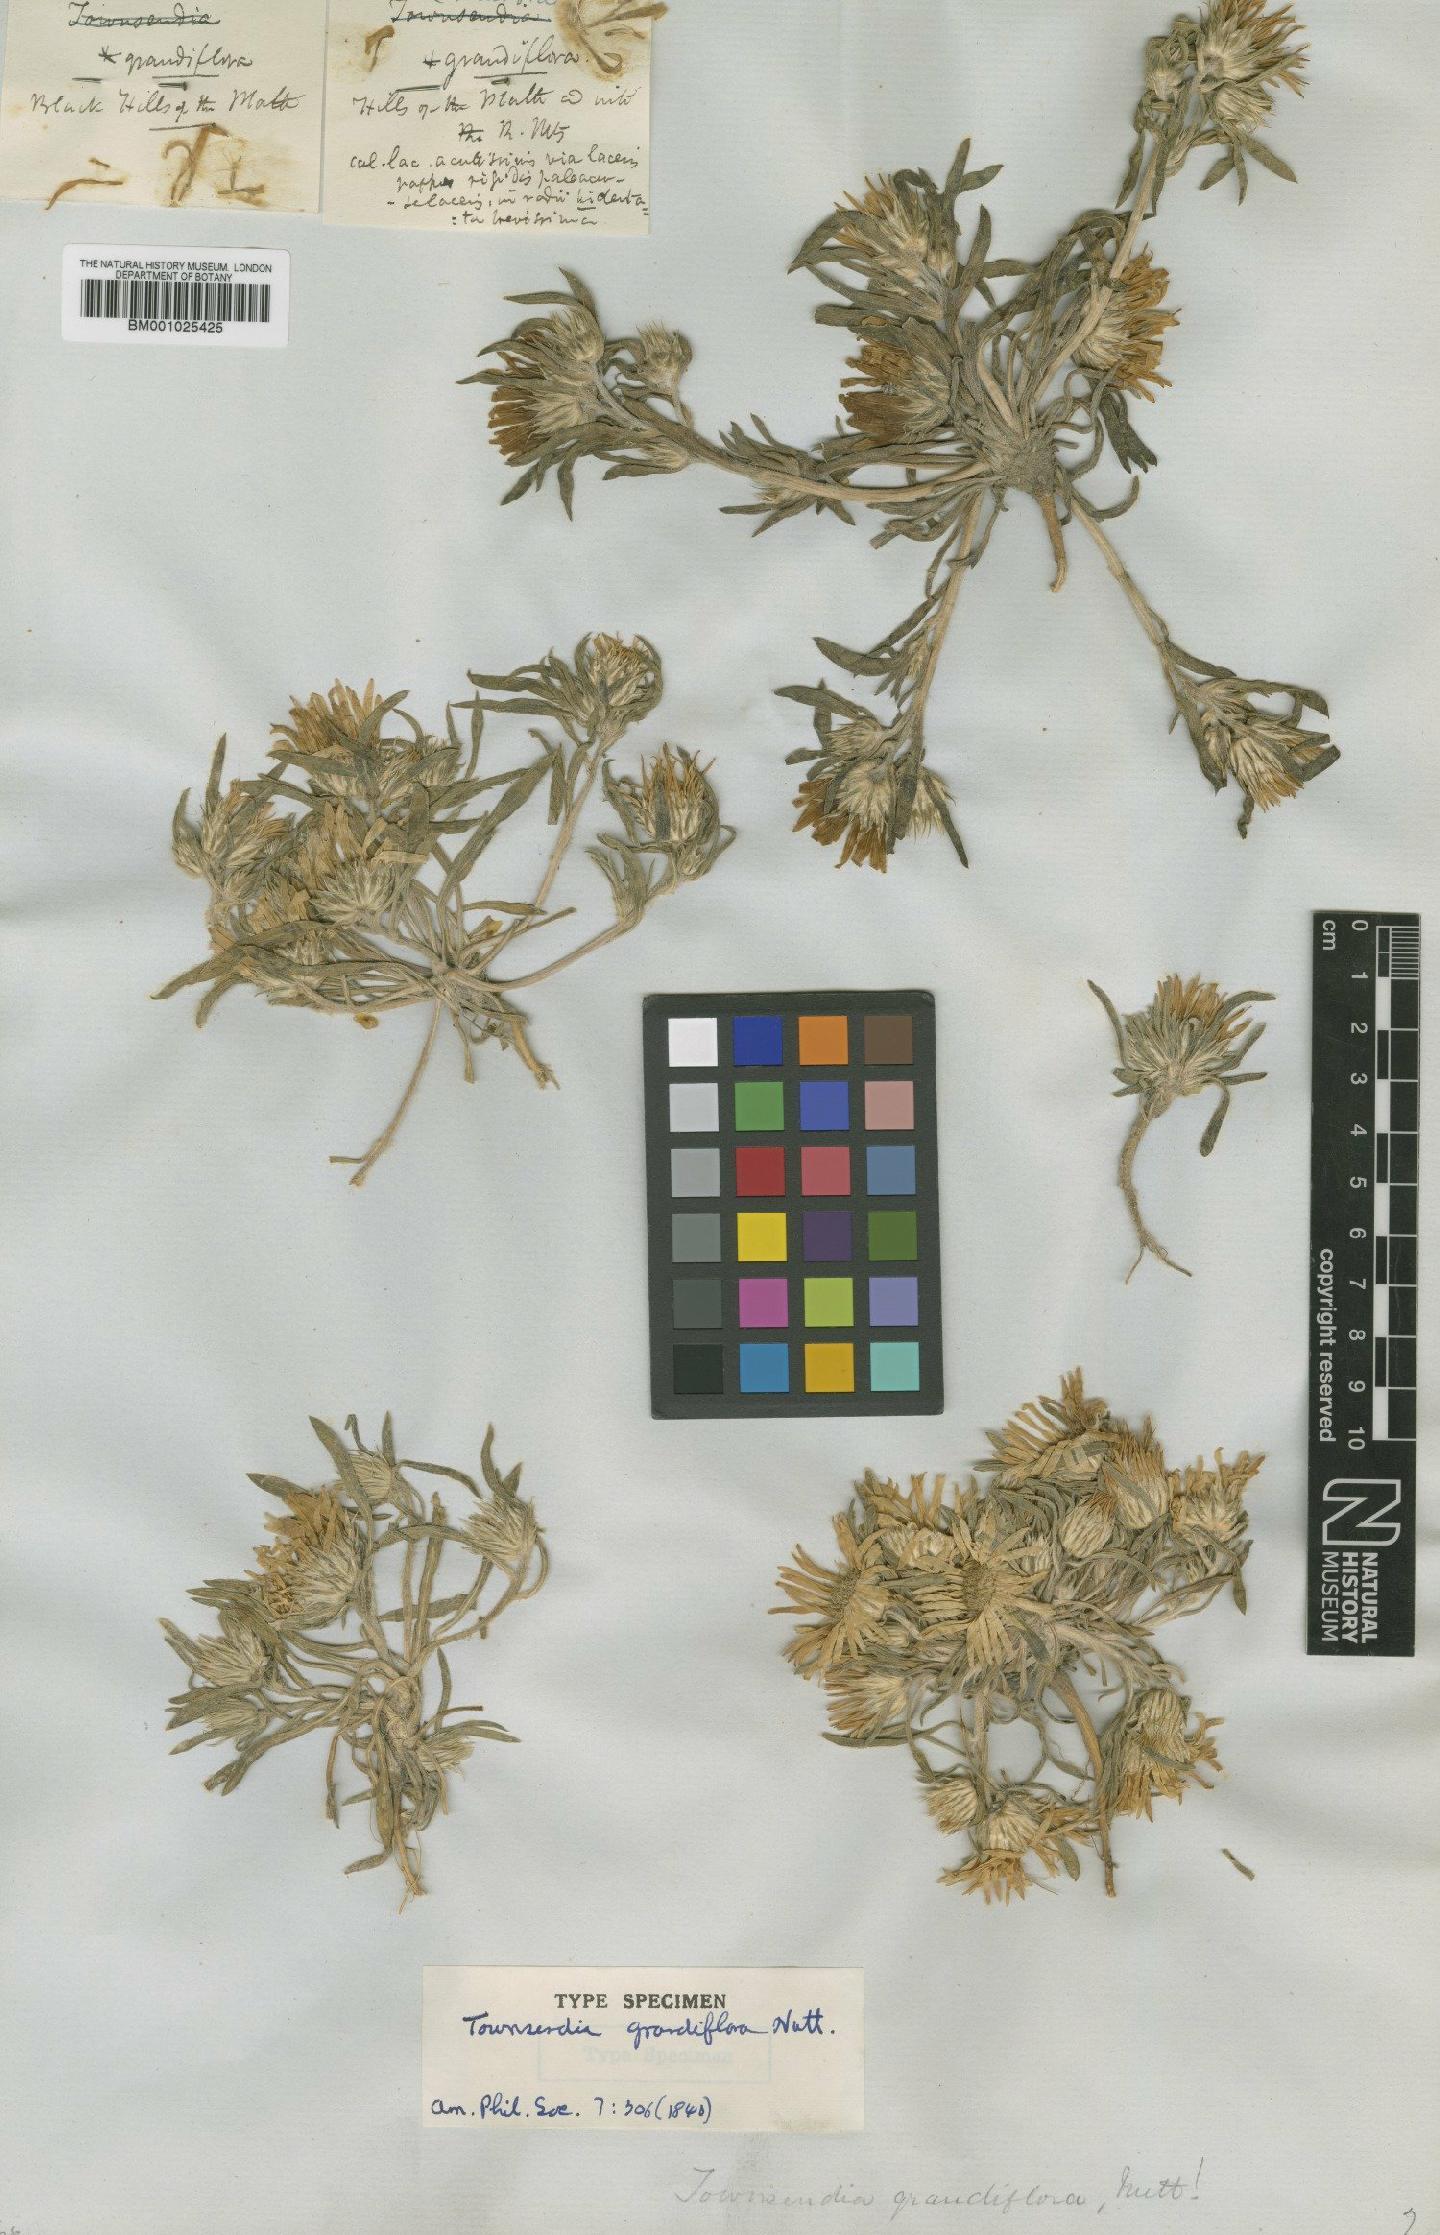 To NHMUK collection (Townsendia grandiflora Nutt.; Type; NHMUK:ecatalogue:747228)